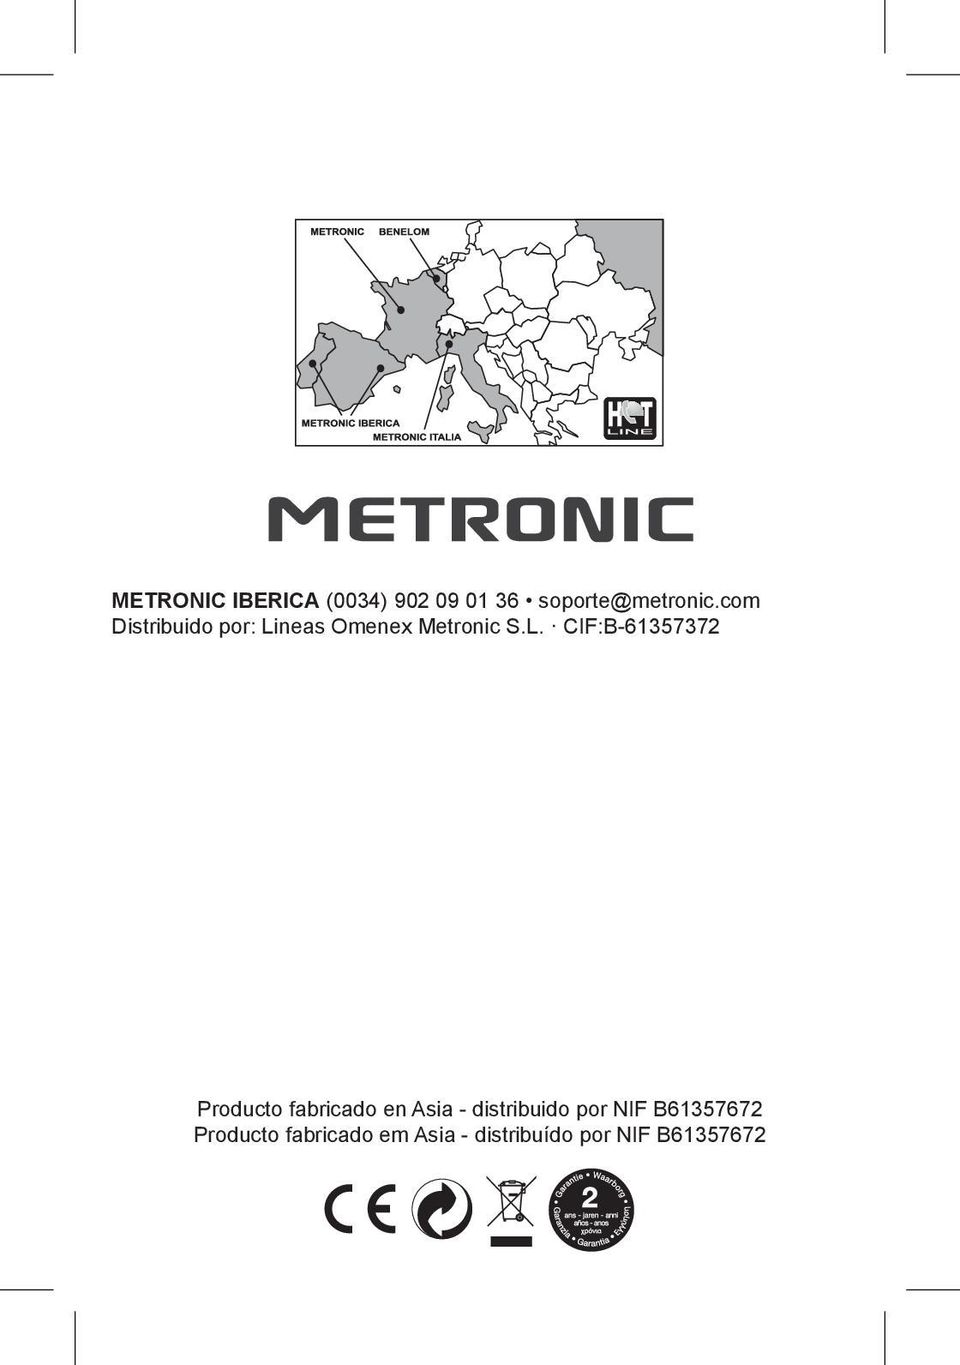 neas Omenex Metronic S.L.